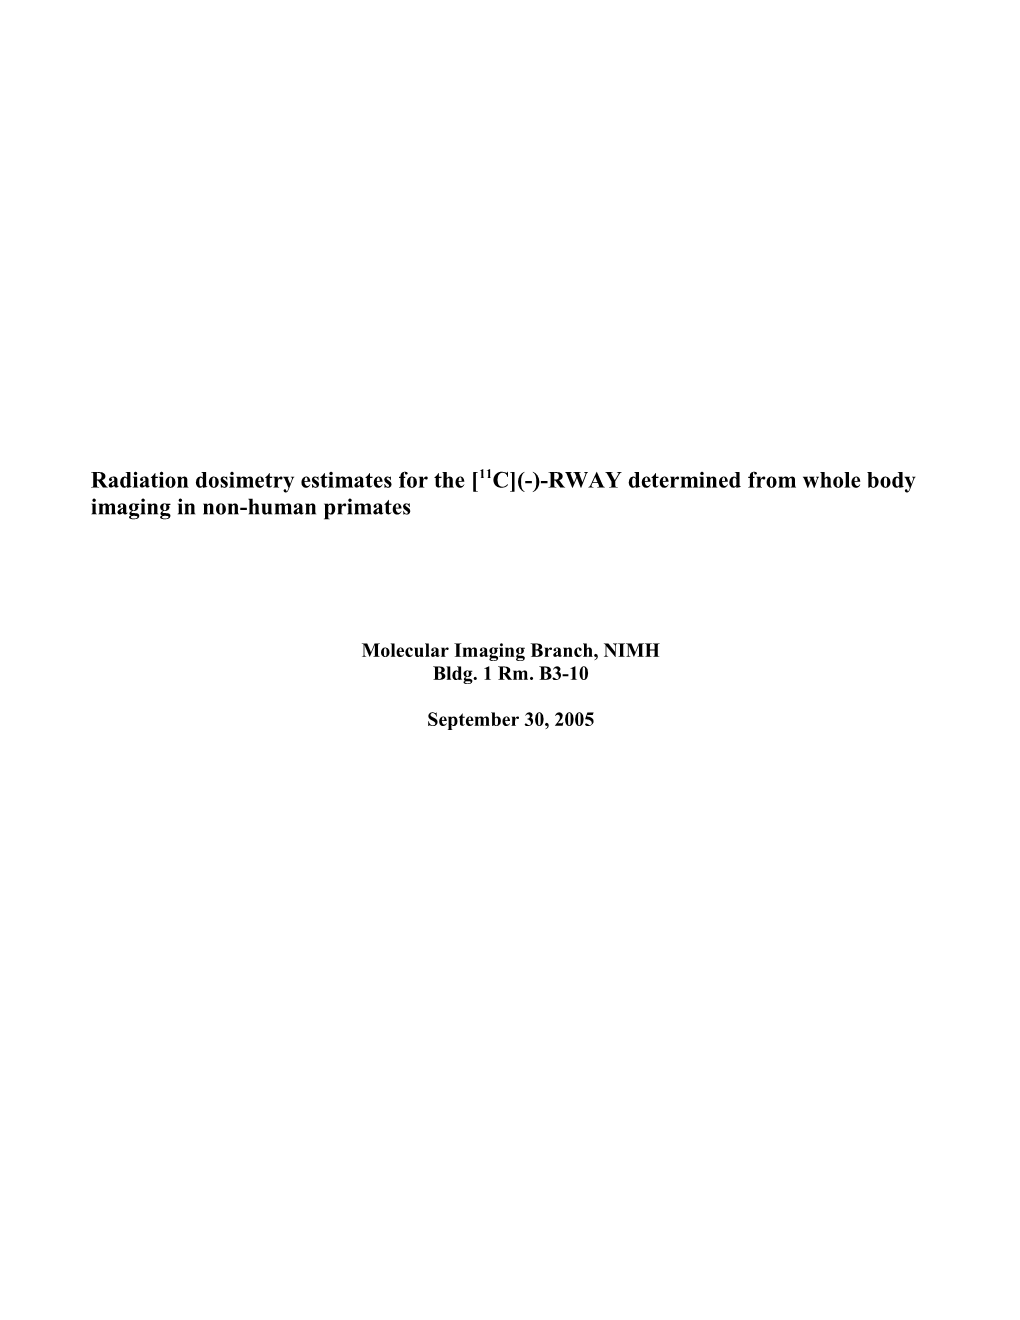 Monkey Dosimetry Estimates for the Phosphodiesterase 4 (PDE4) Enzyme Radioligand (R)- 11C